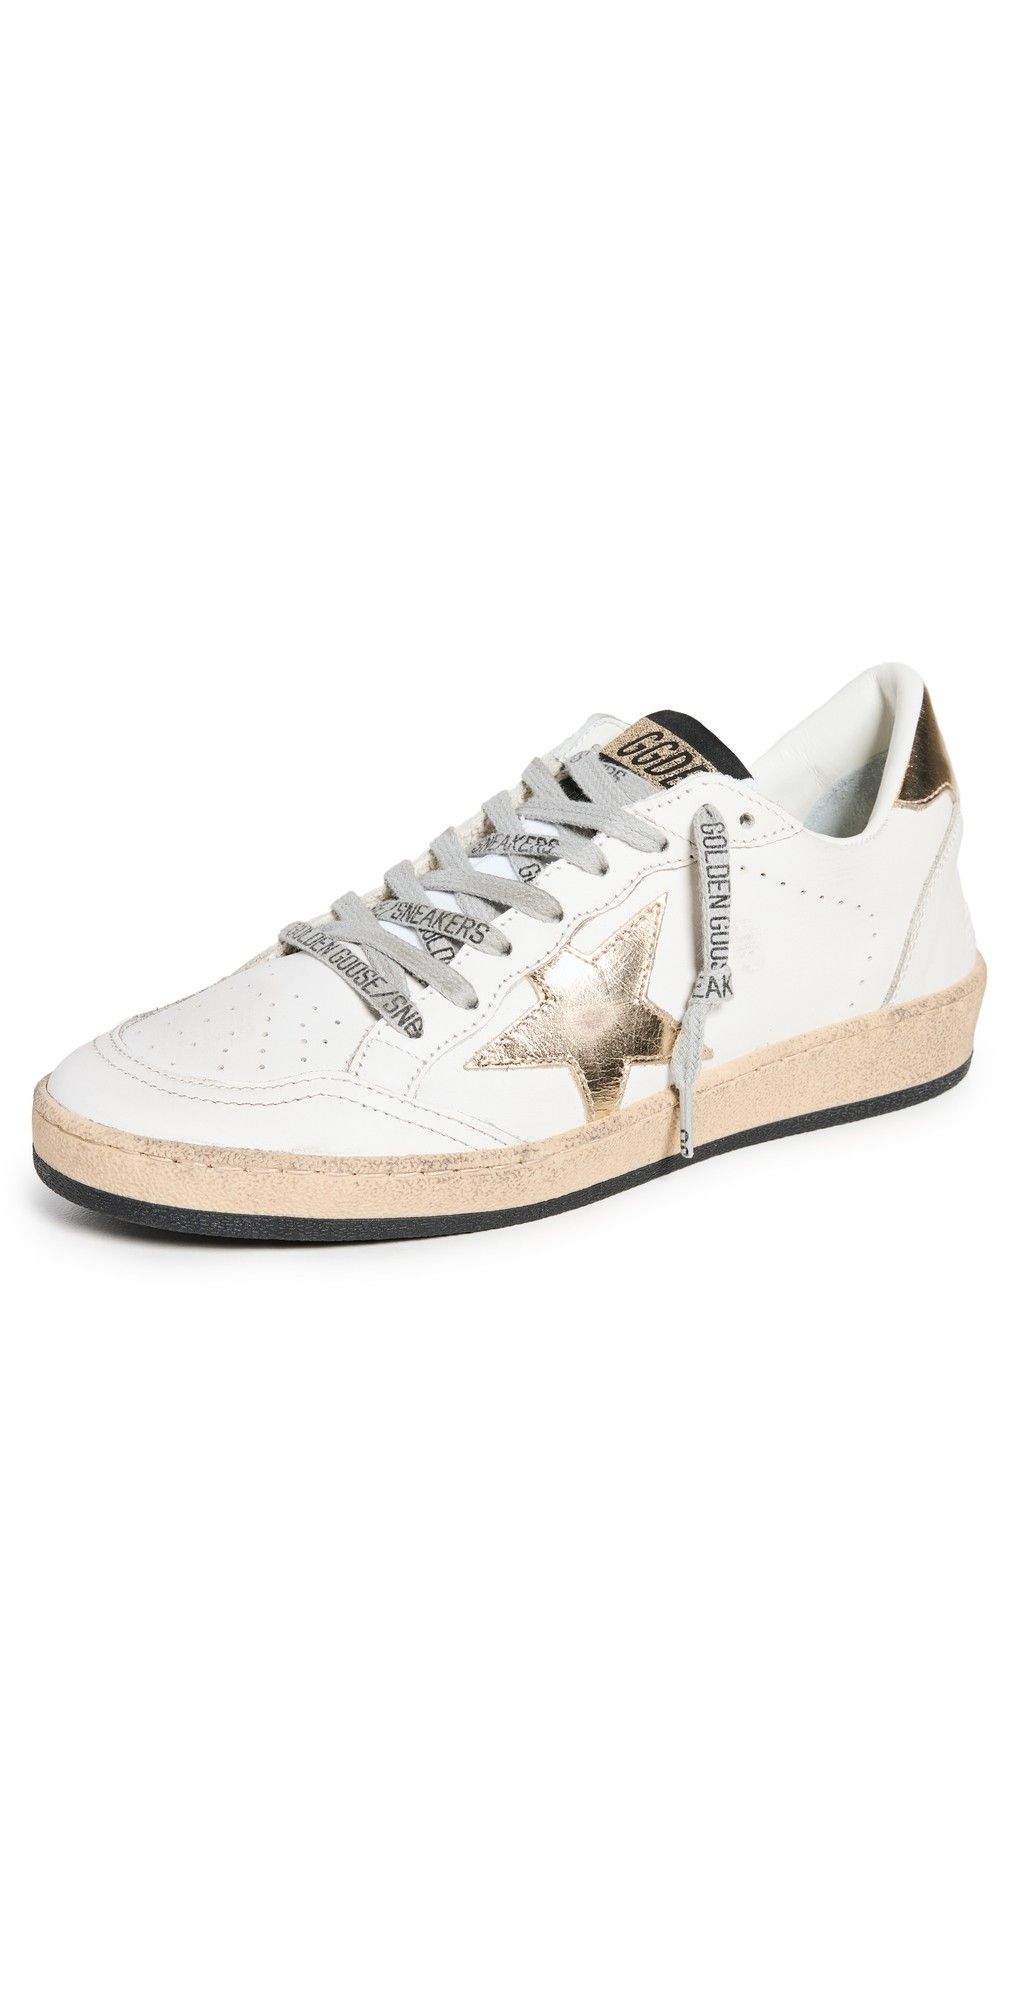 Ballstar Leather Upper Laminated Star Sneakers | Shopbop